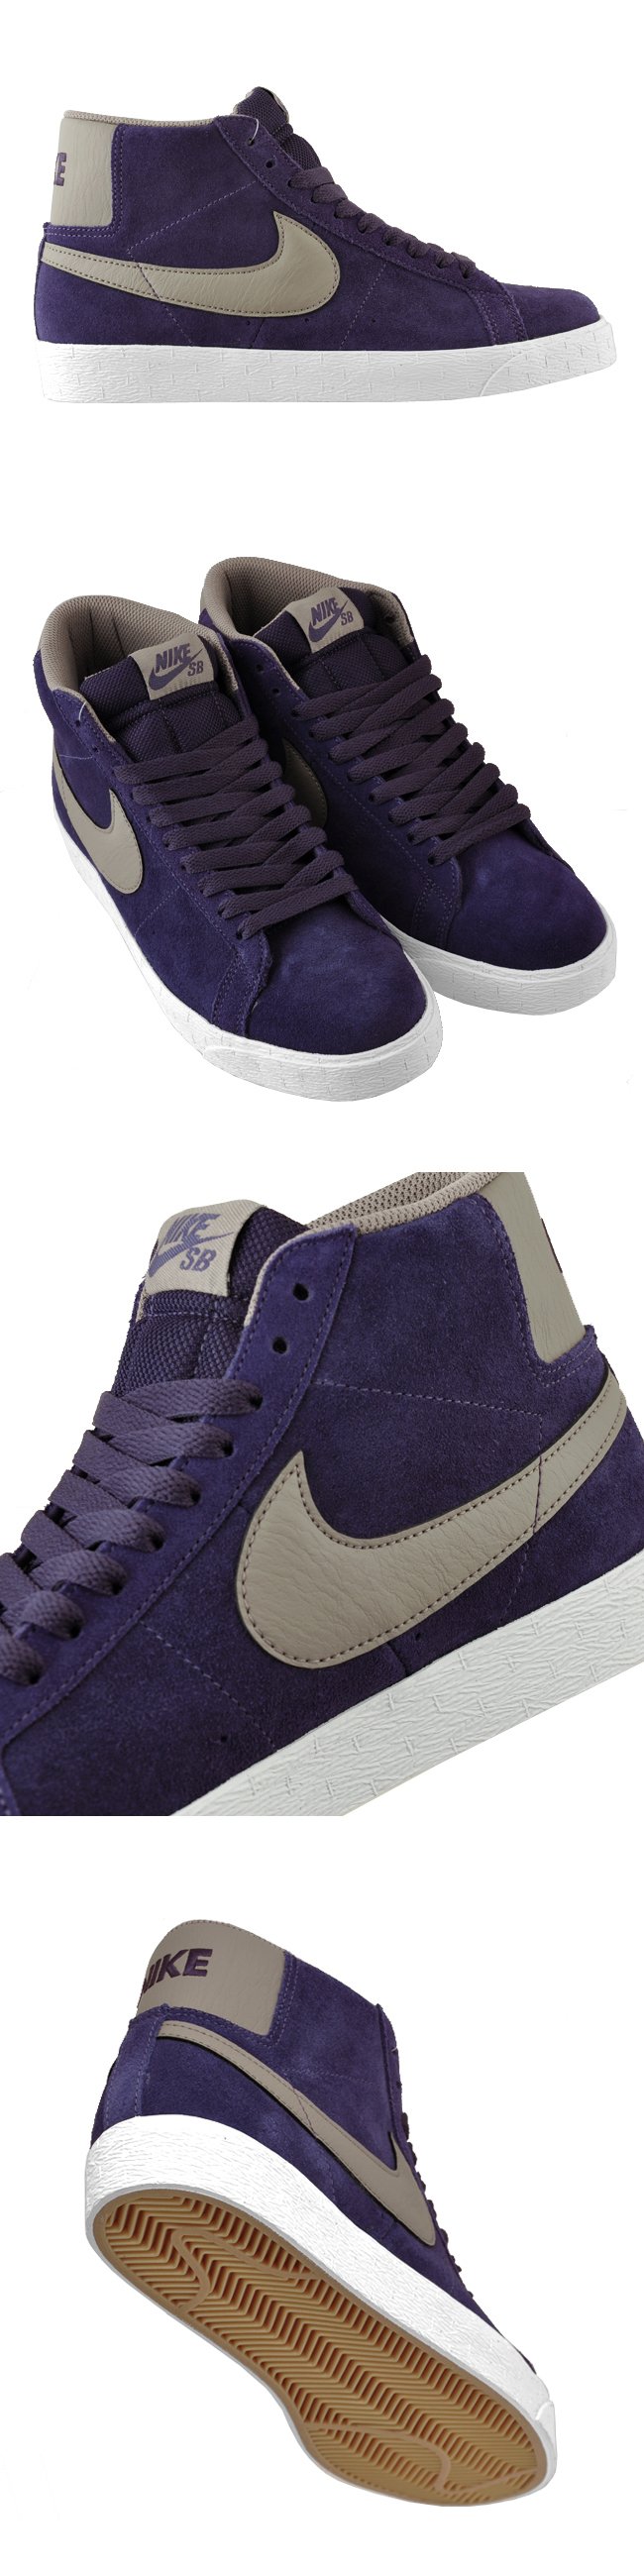 Nike SB Blazer 'Quasar Purple/Iron' - February 2012